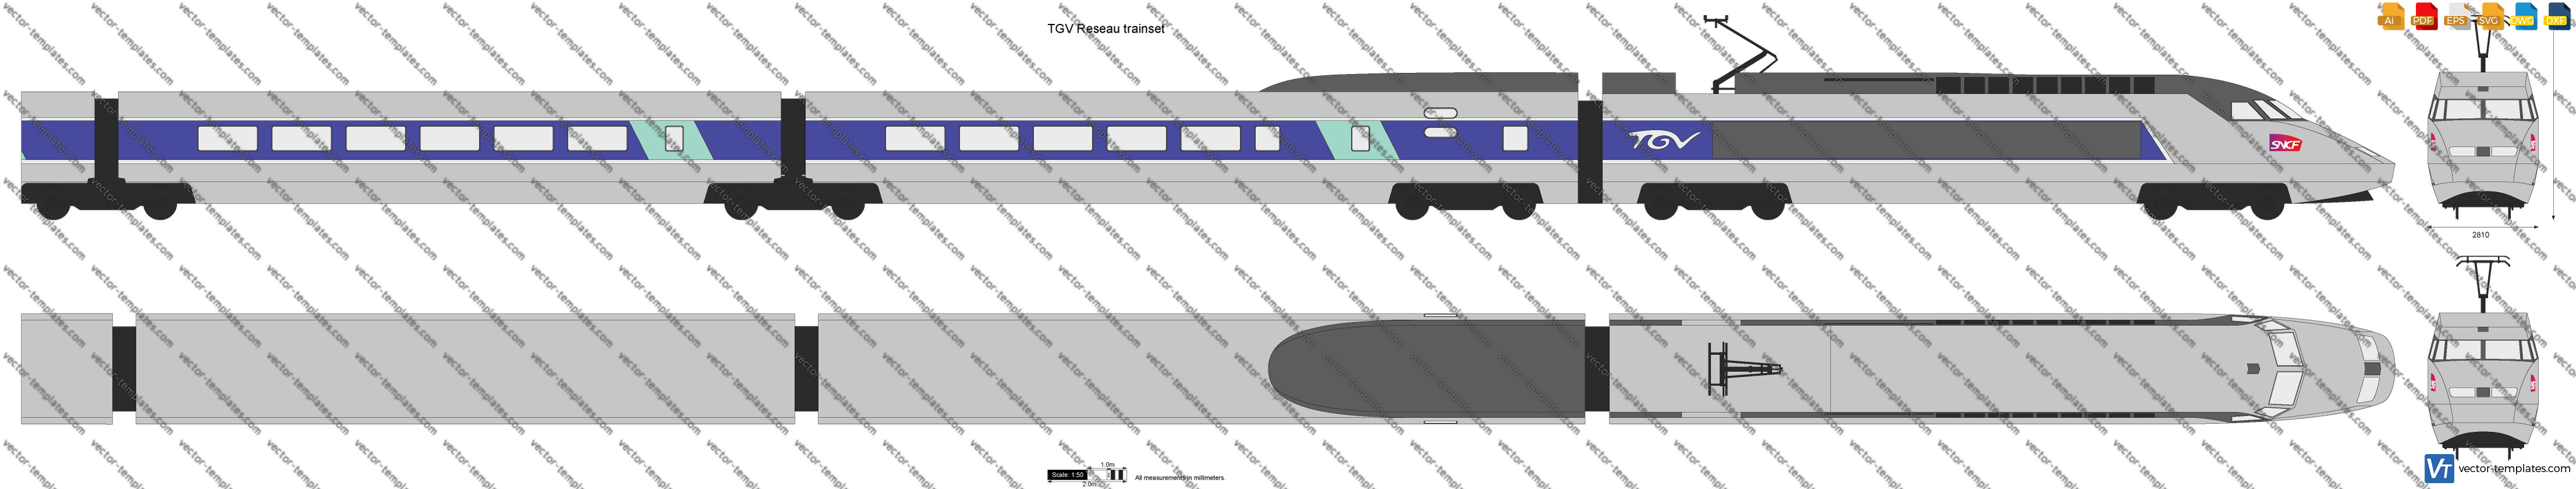 TGV Reseau trainset 